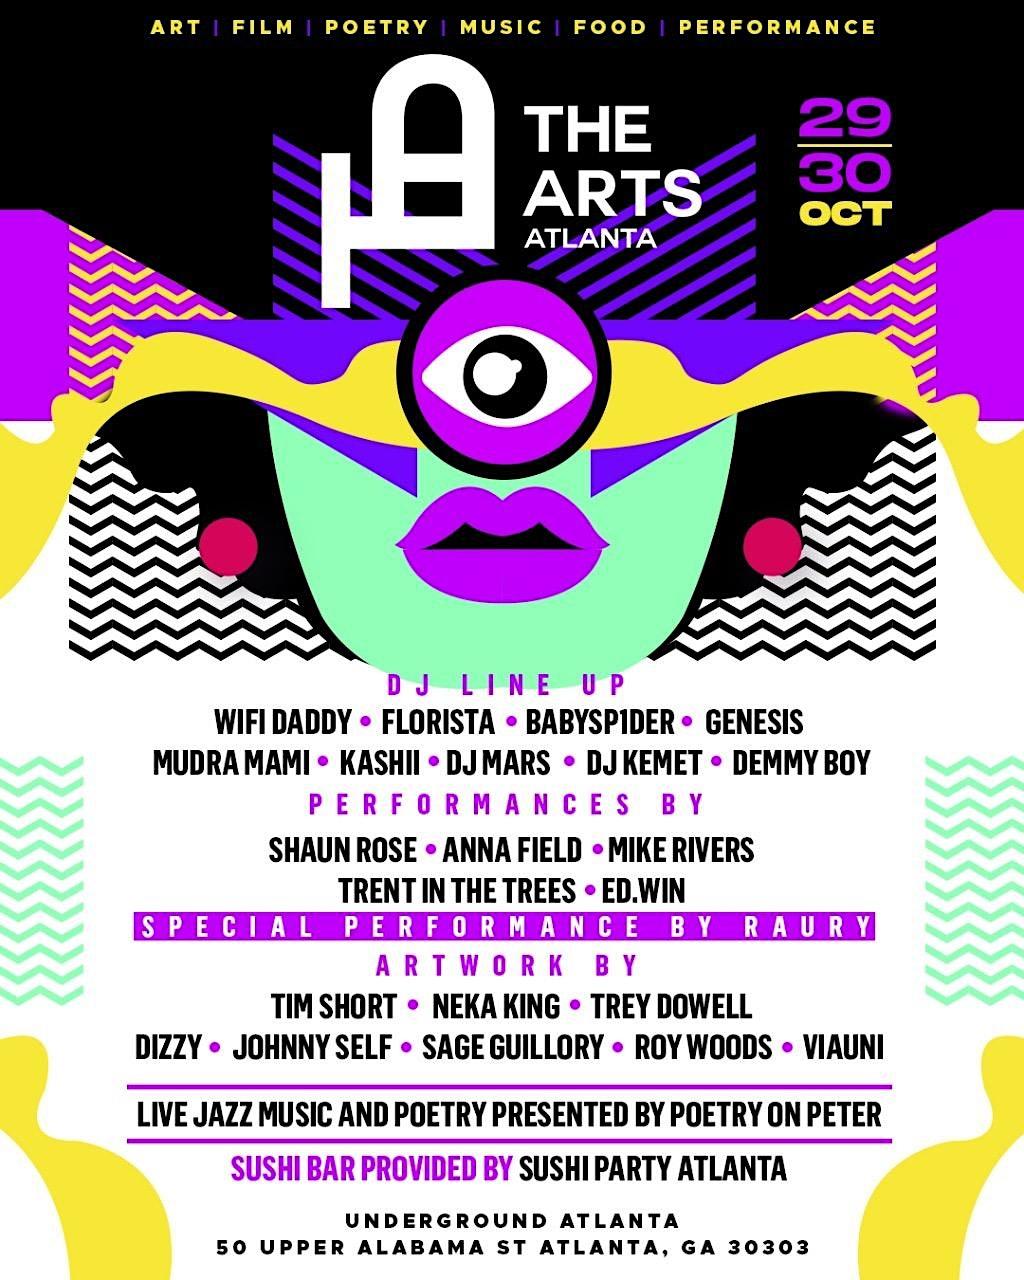 The Arts Atlanta (Halloween weekend)
Sat Oct 29, 2:00 PM - Sun Oct 30, 11:30 PM
in 11 days